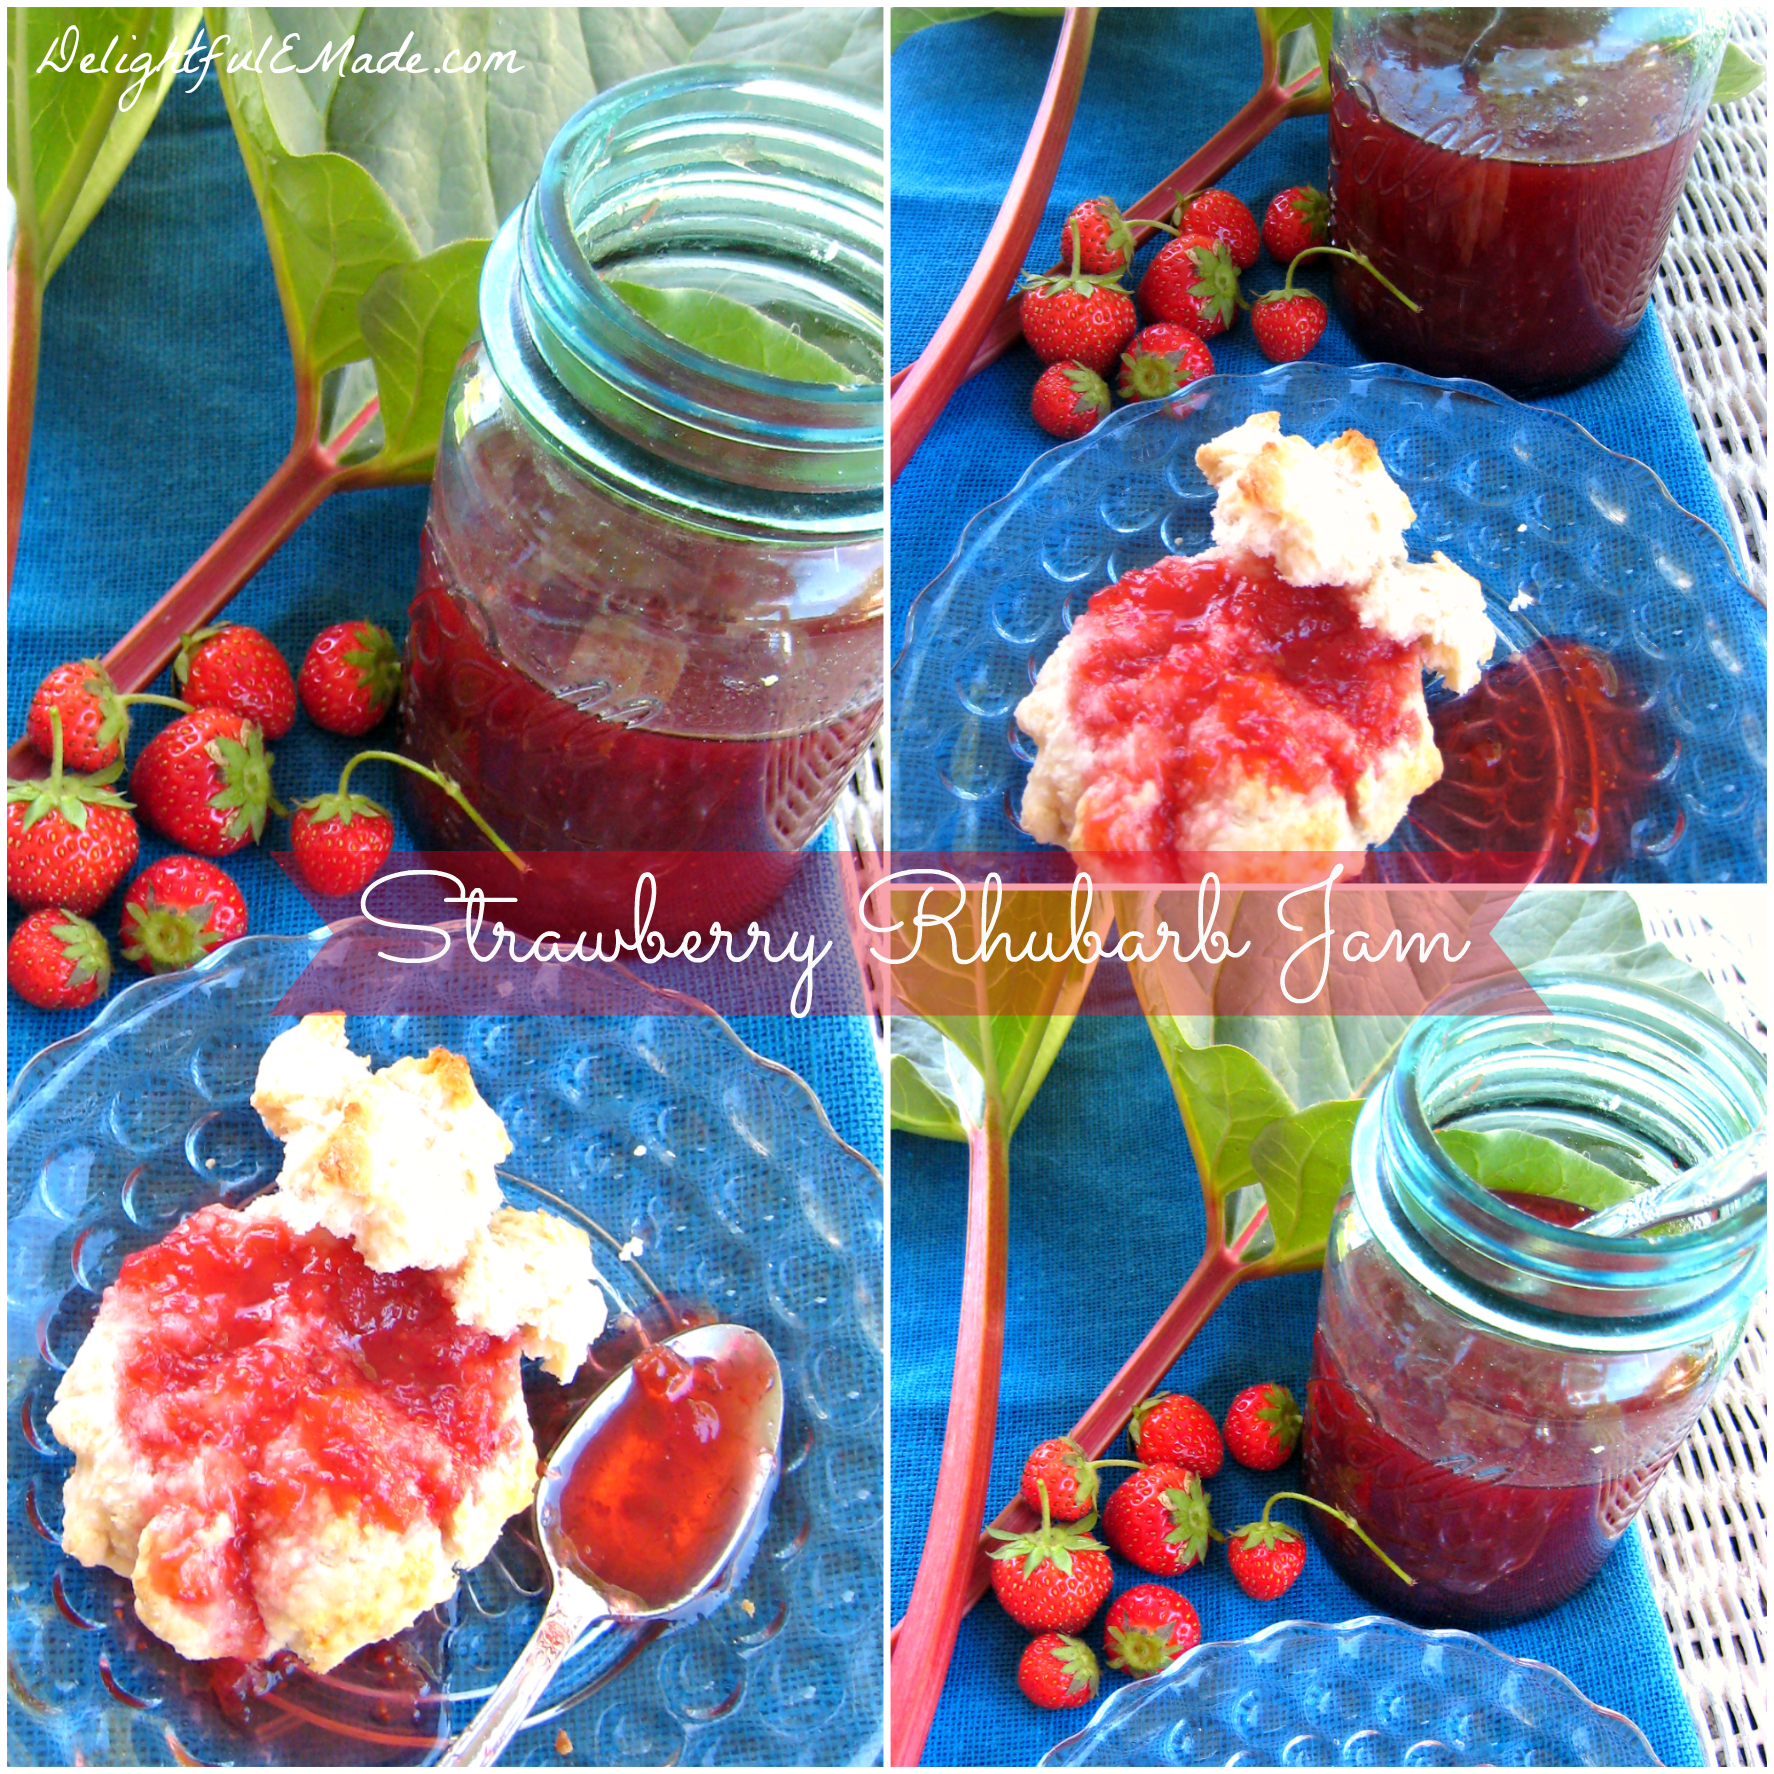 Strawberry Rhubarb Jam by DelightfulEMade.com